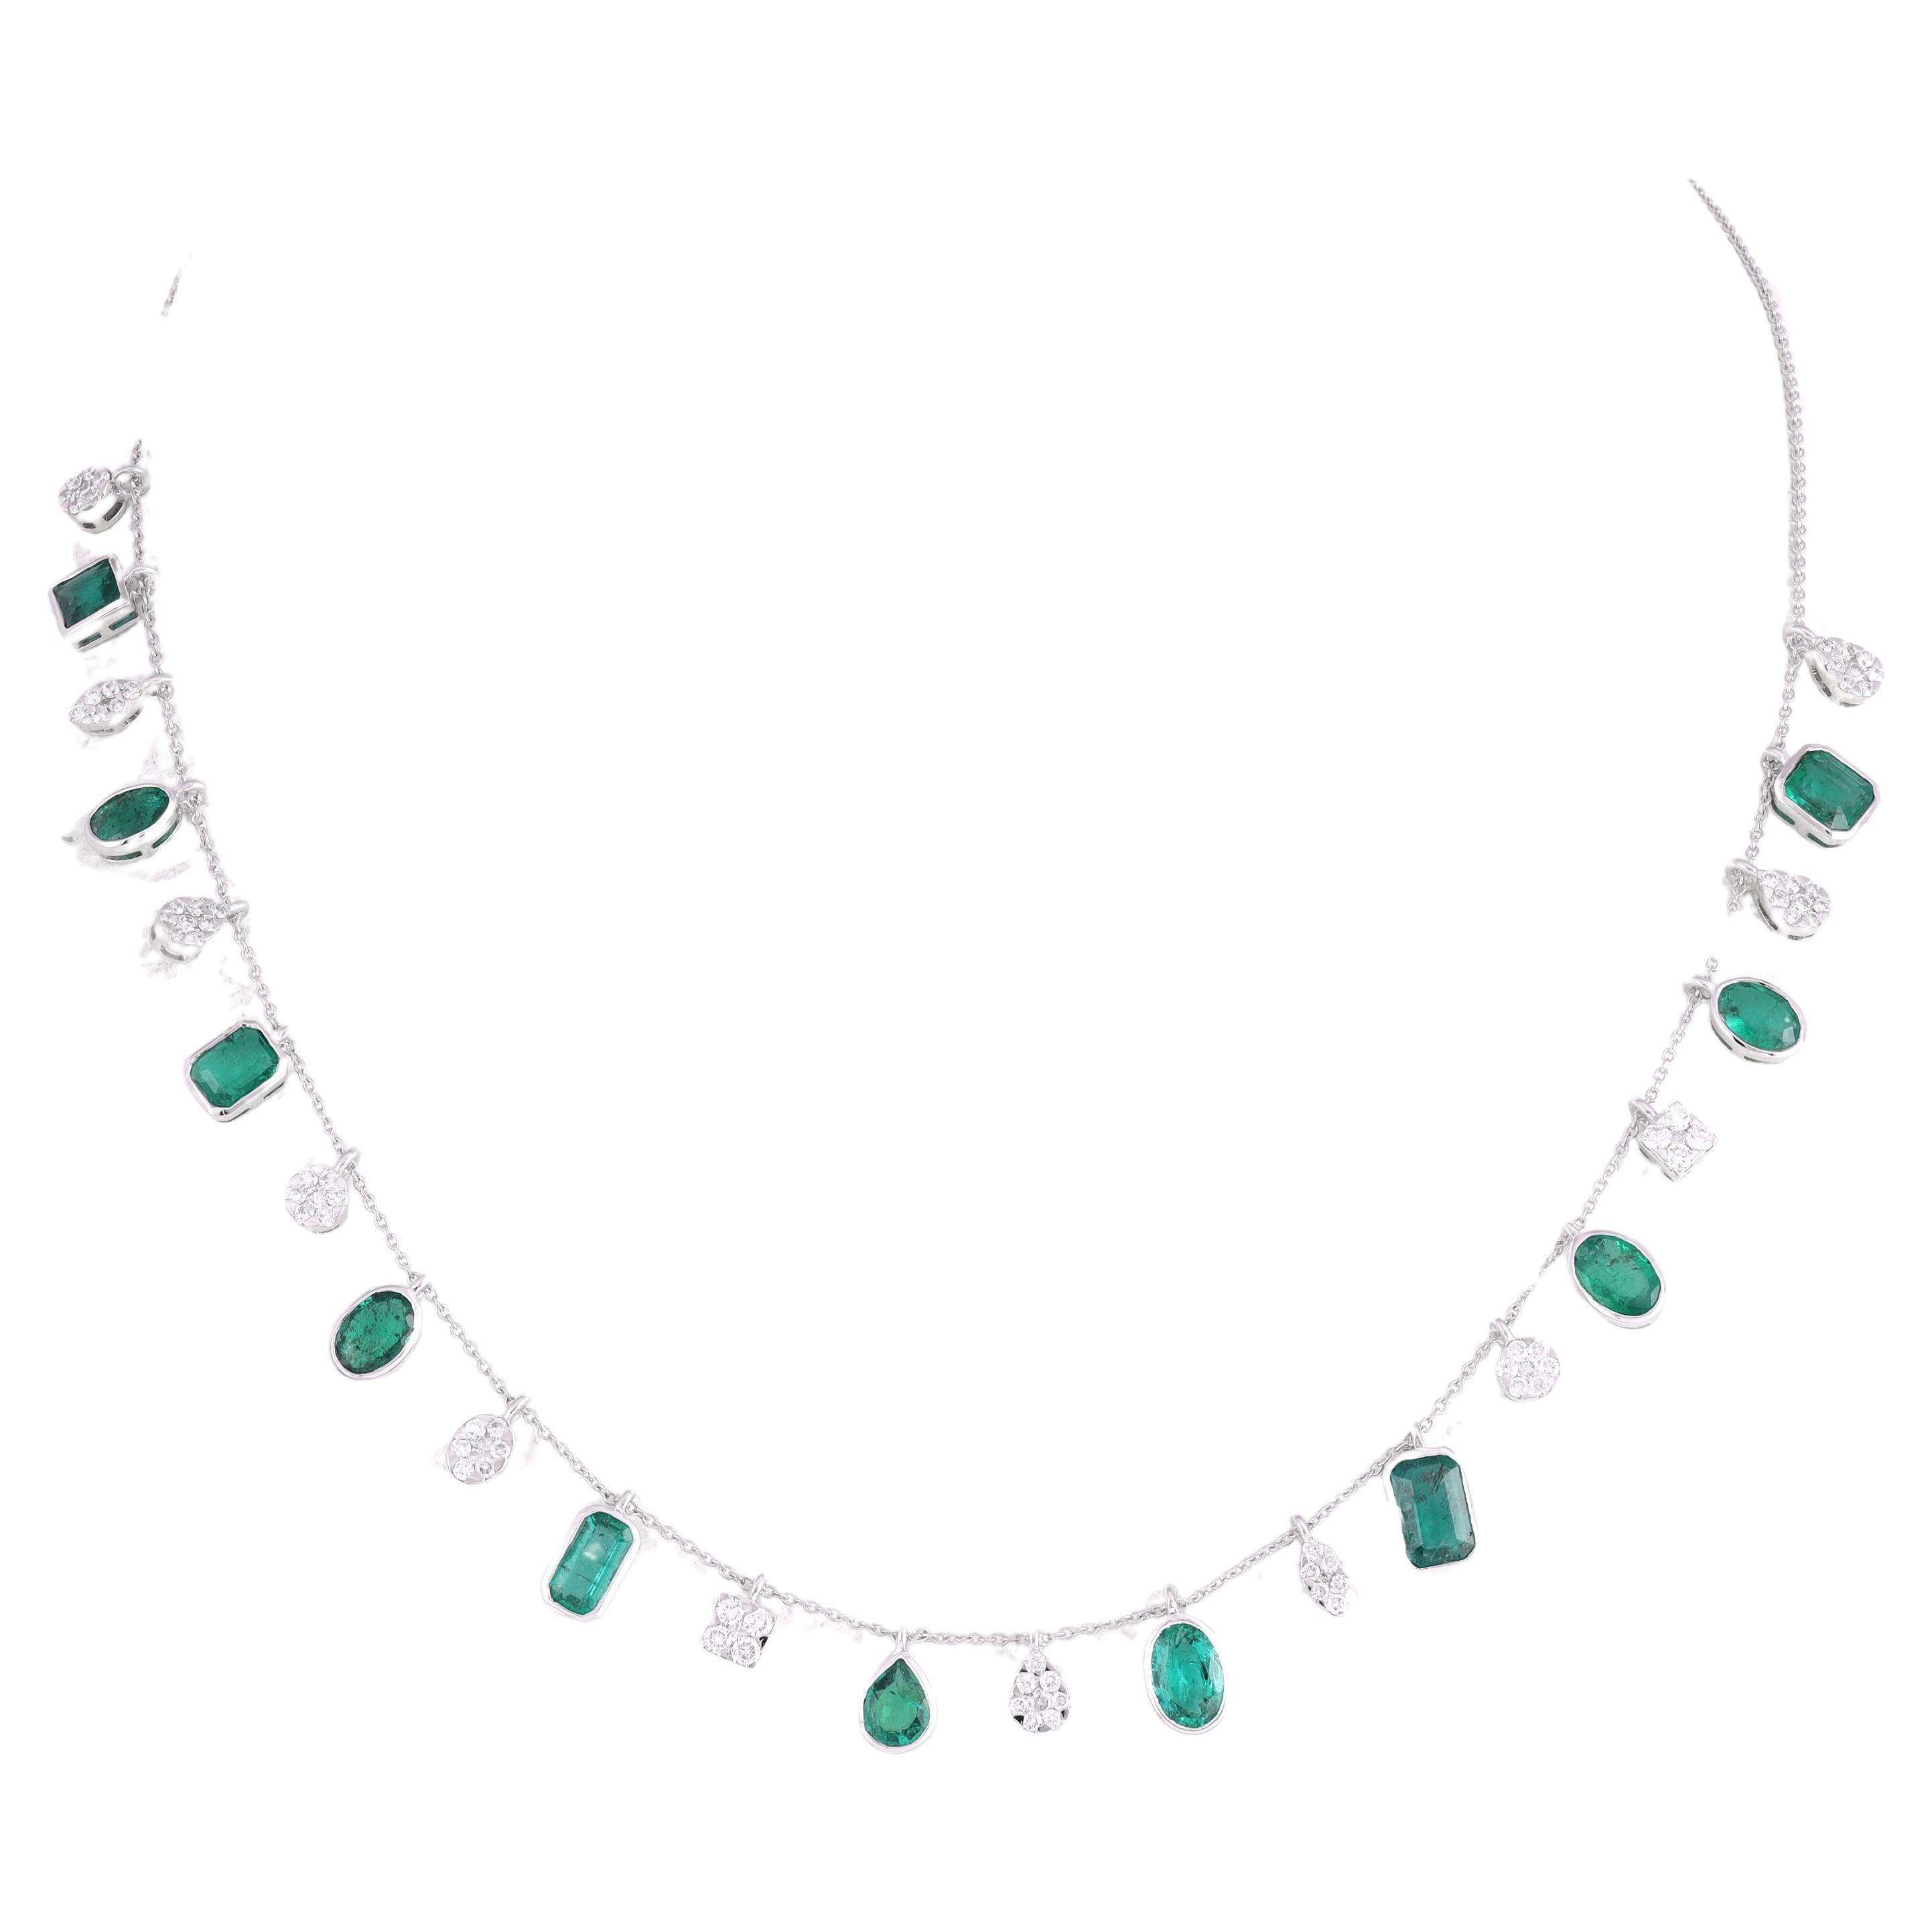  7.34 Carat Emerald & Diamond Chain Necklace in 18k White Gold